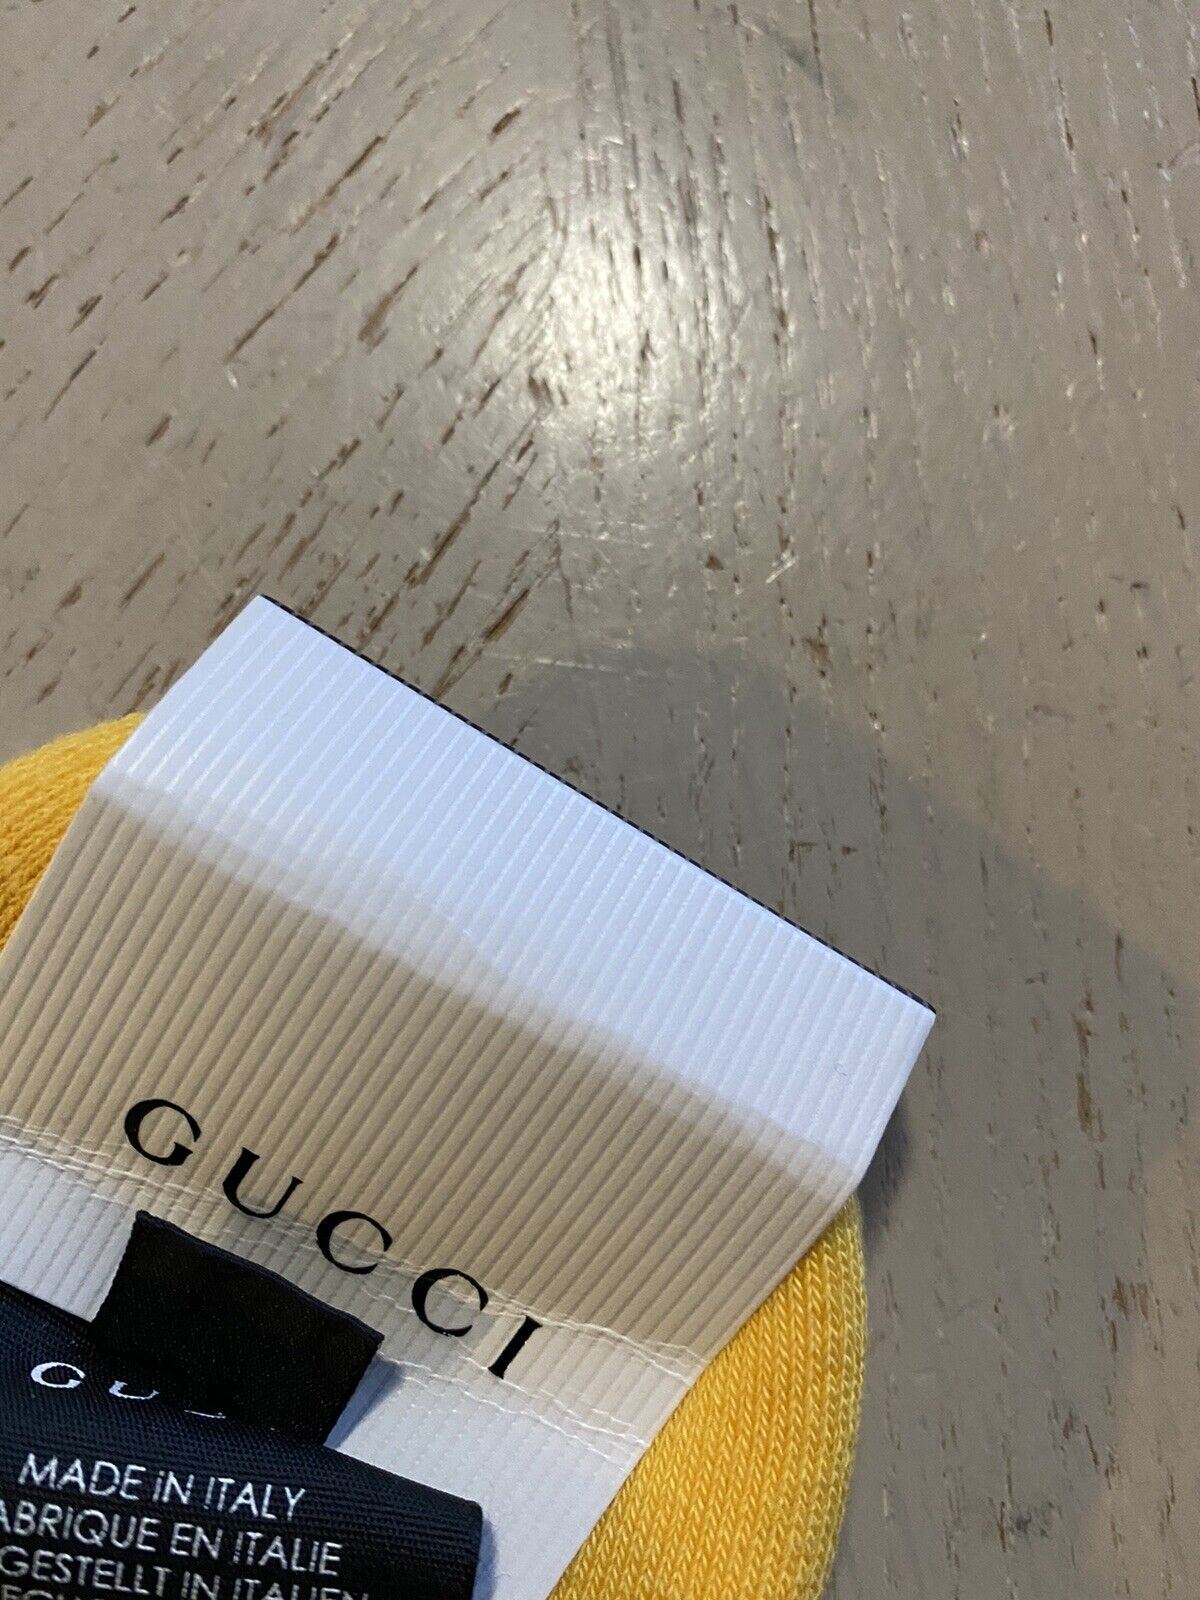 Мини-носки греческого цвета NWT Gucci с монограммой Gucci, желтые, размер S, Италия